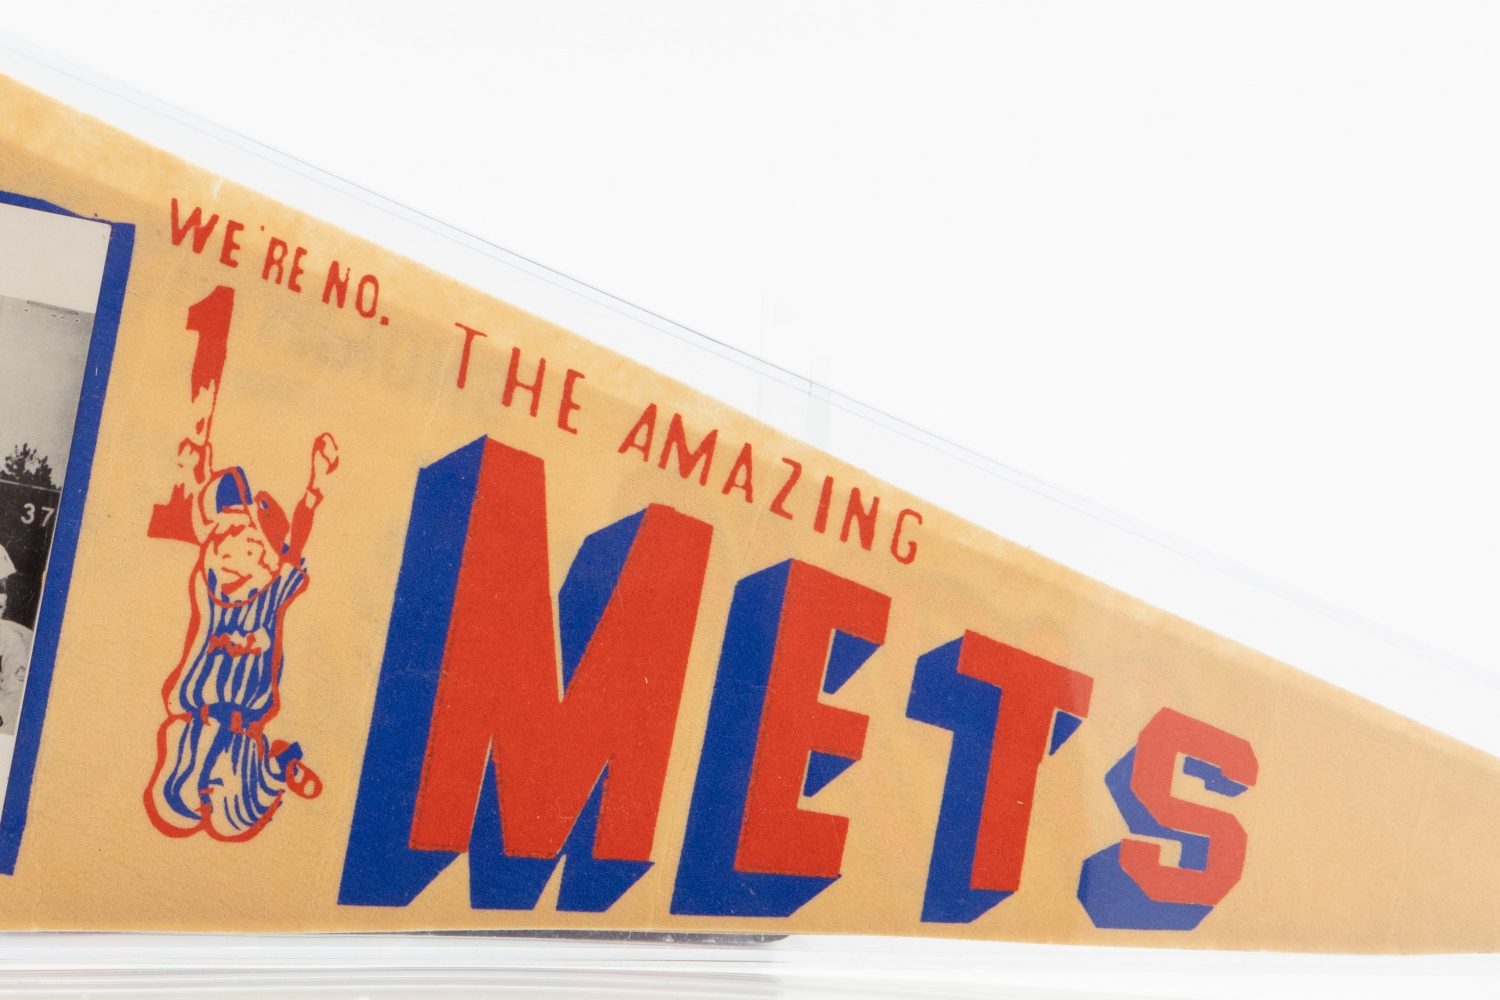 1969 New York Mets NL Championship Pennant